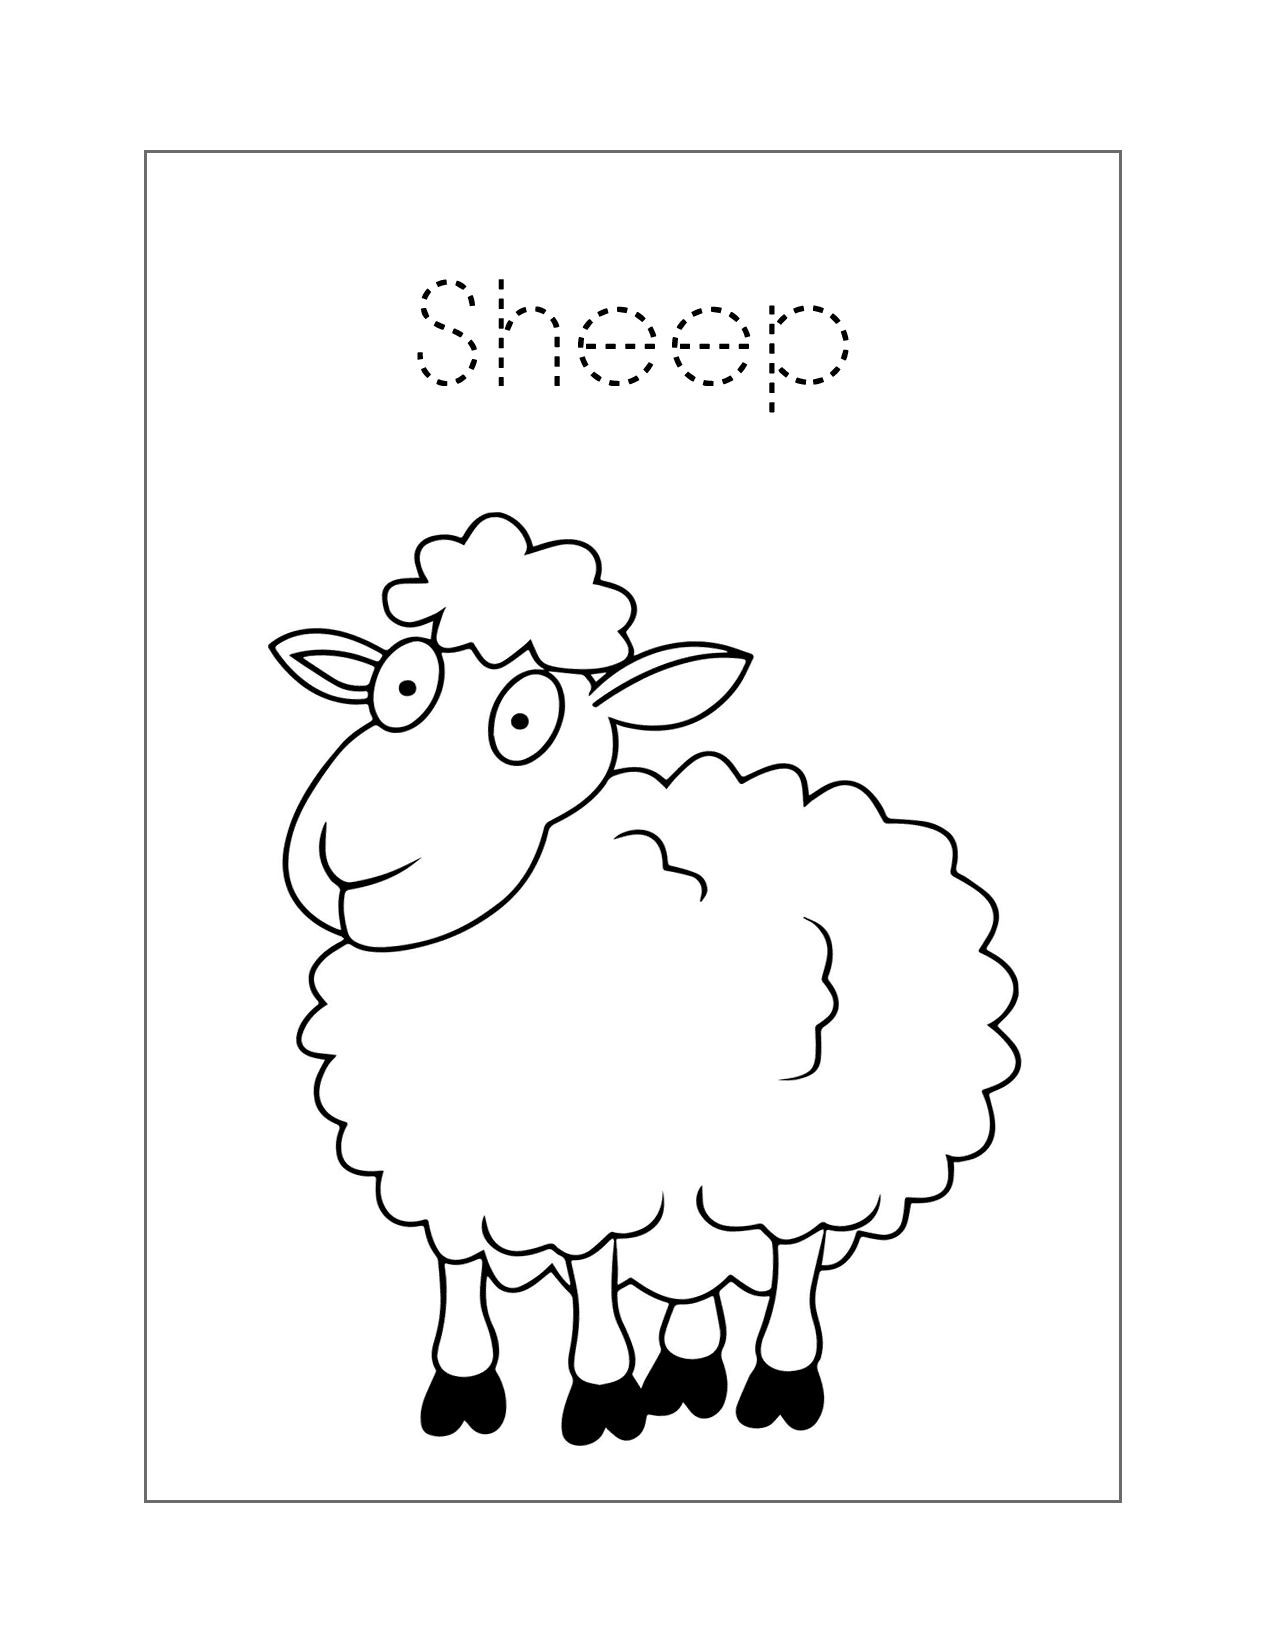 Sheep Spelling Sheet